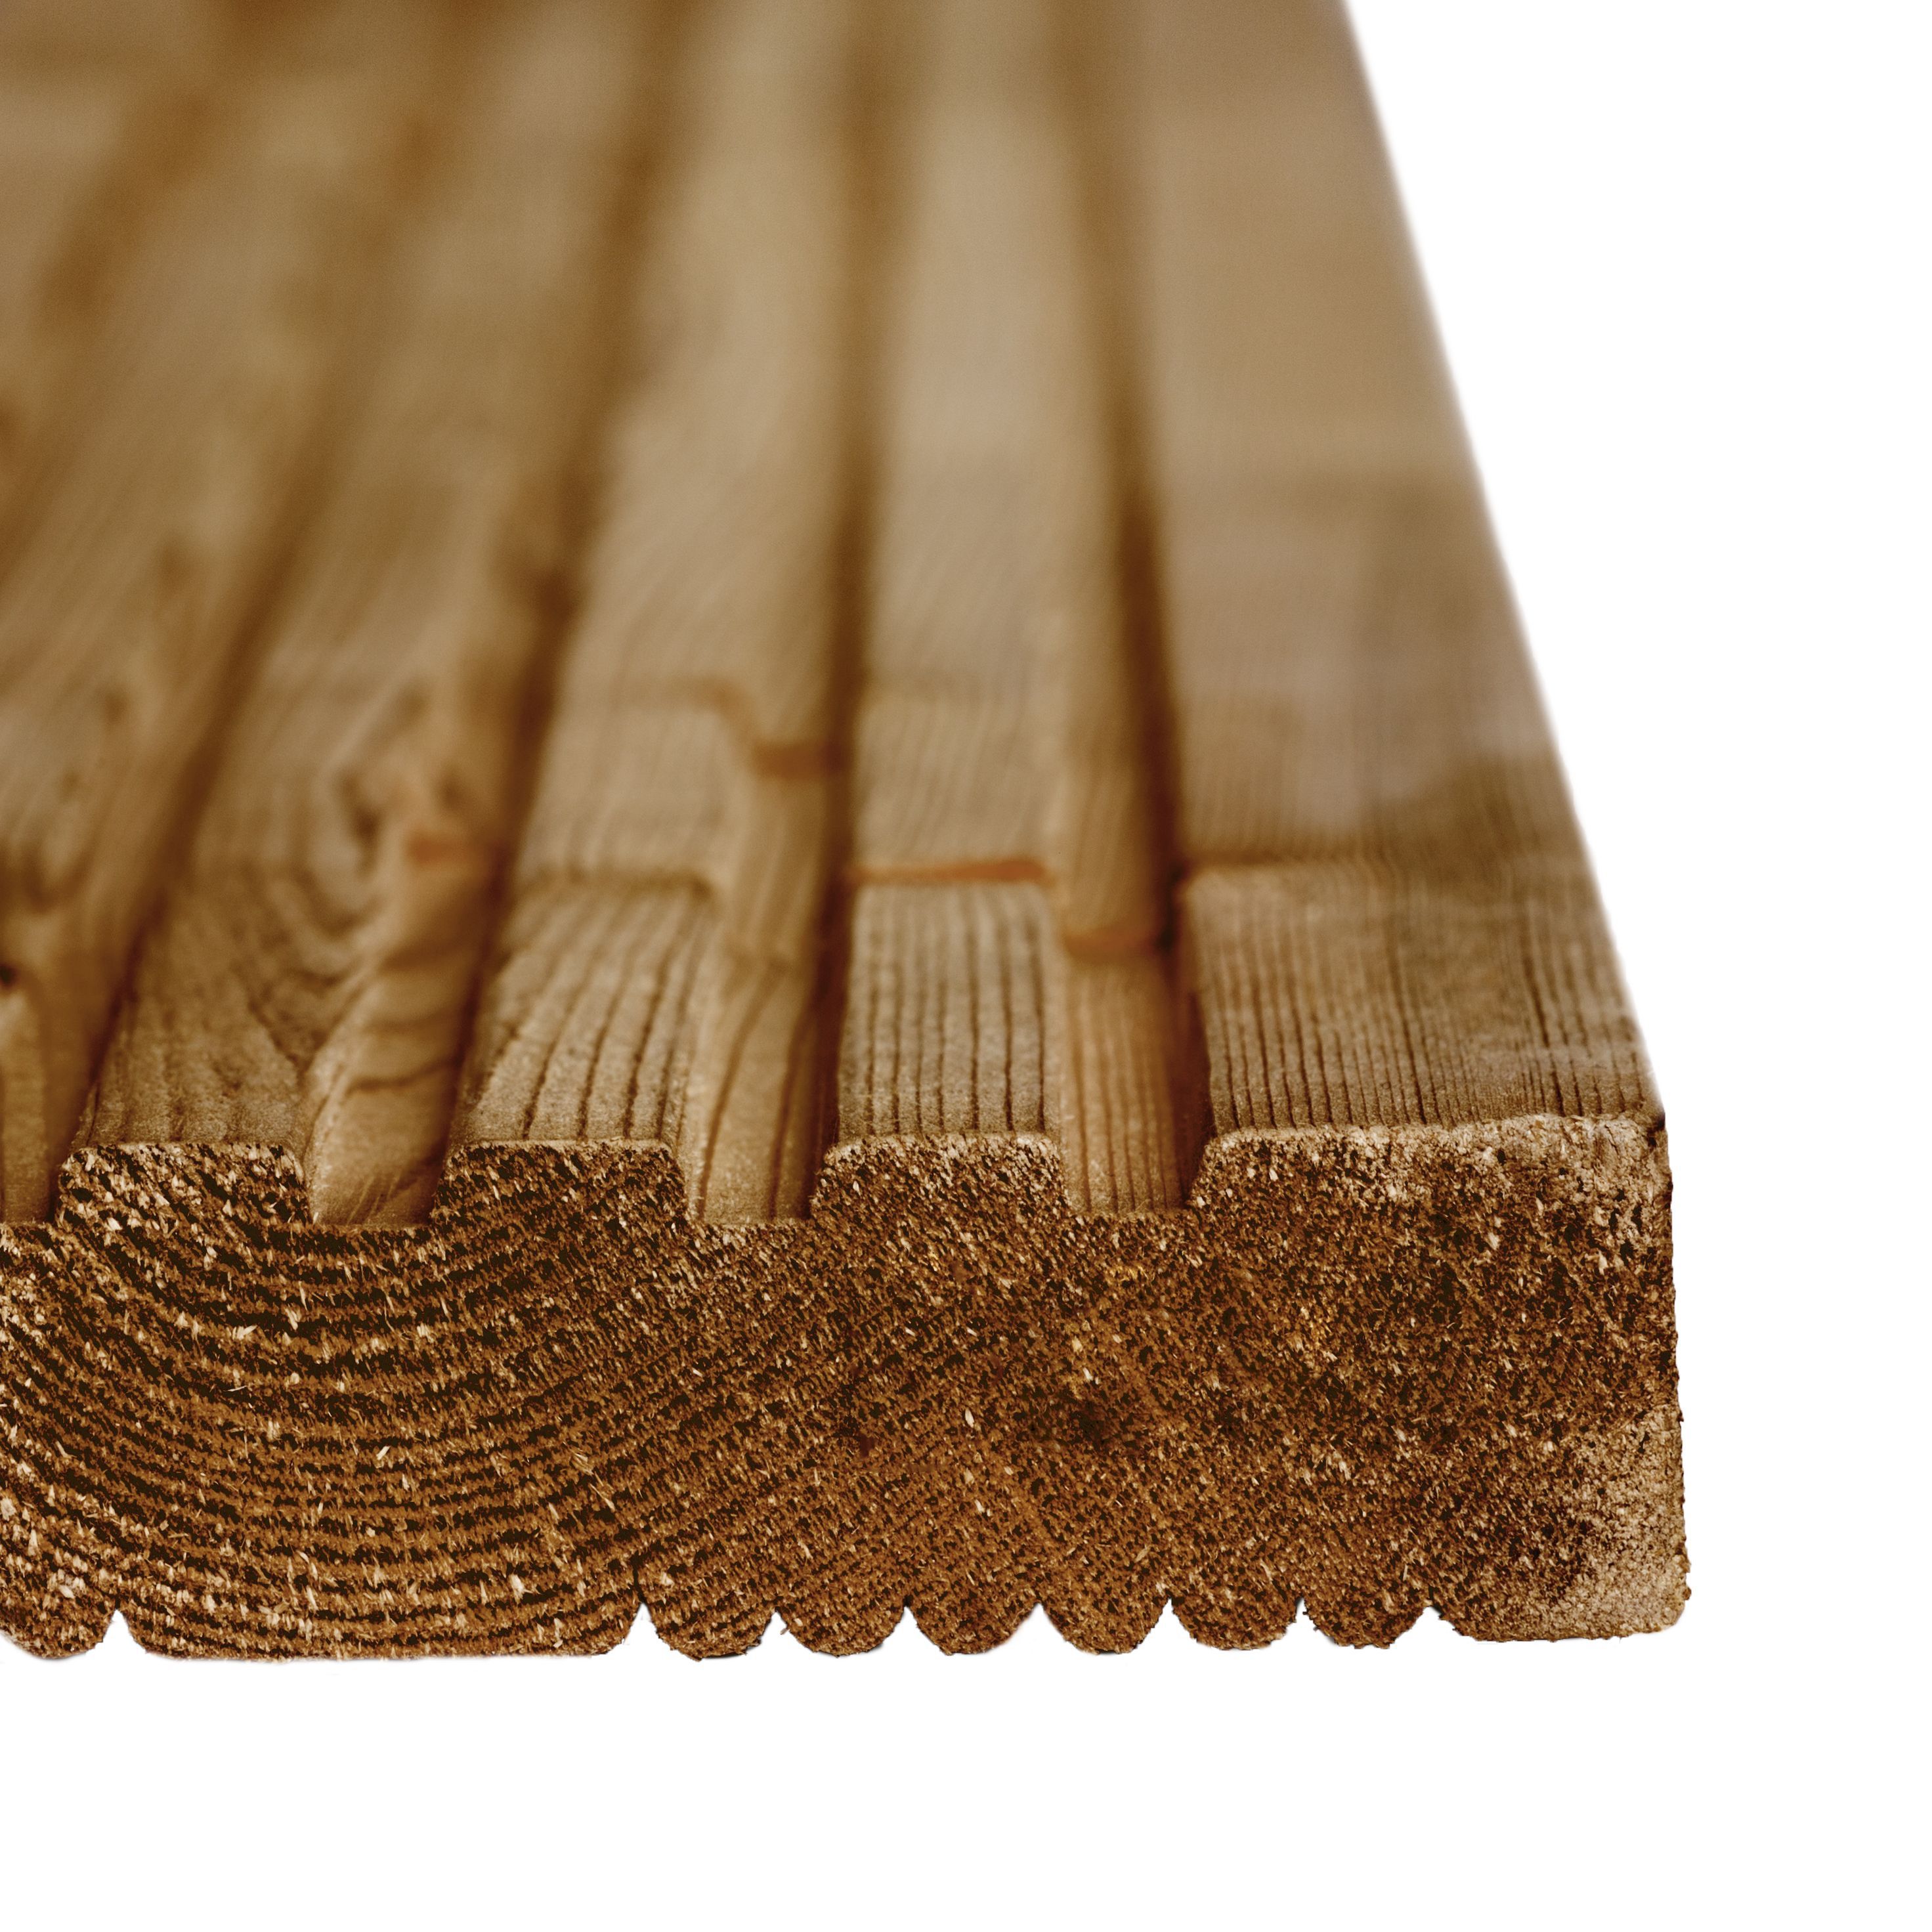 Value Brown Spruce Deck board (L)1.8m (W)120mm (T)24mm